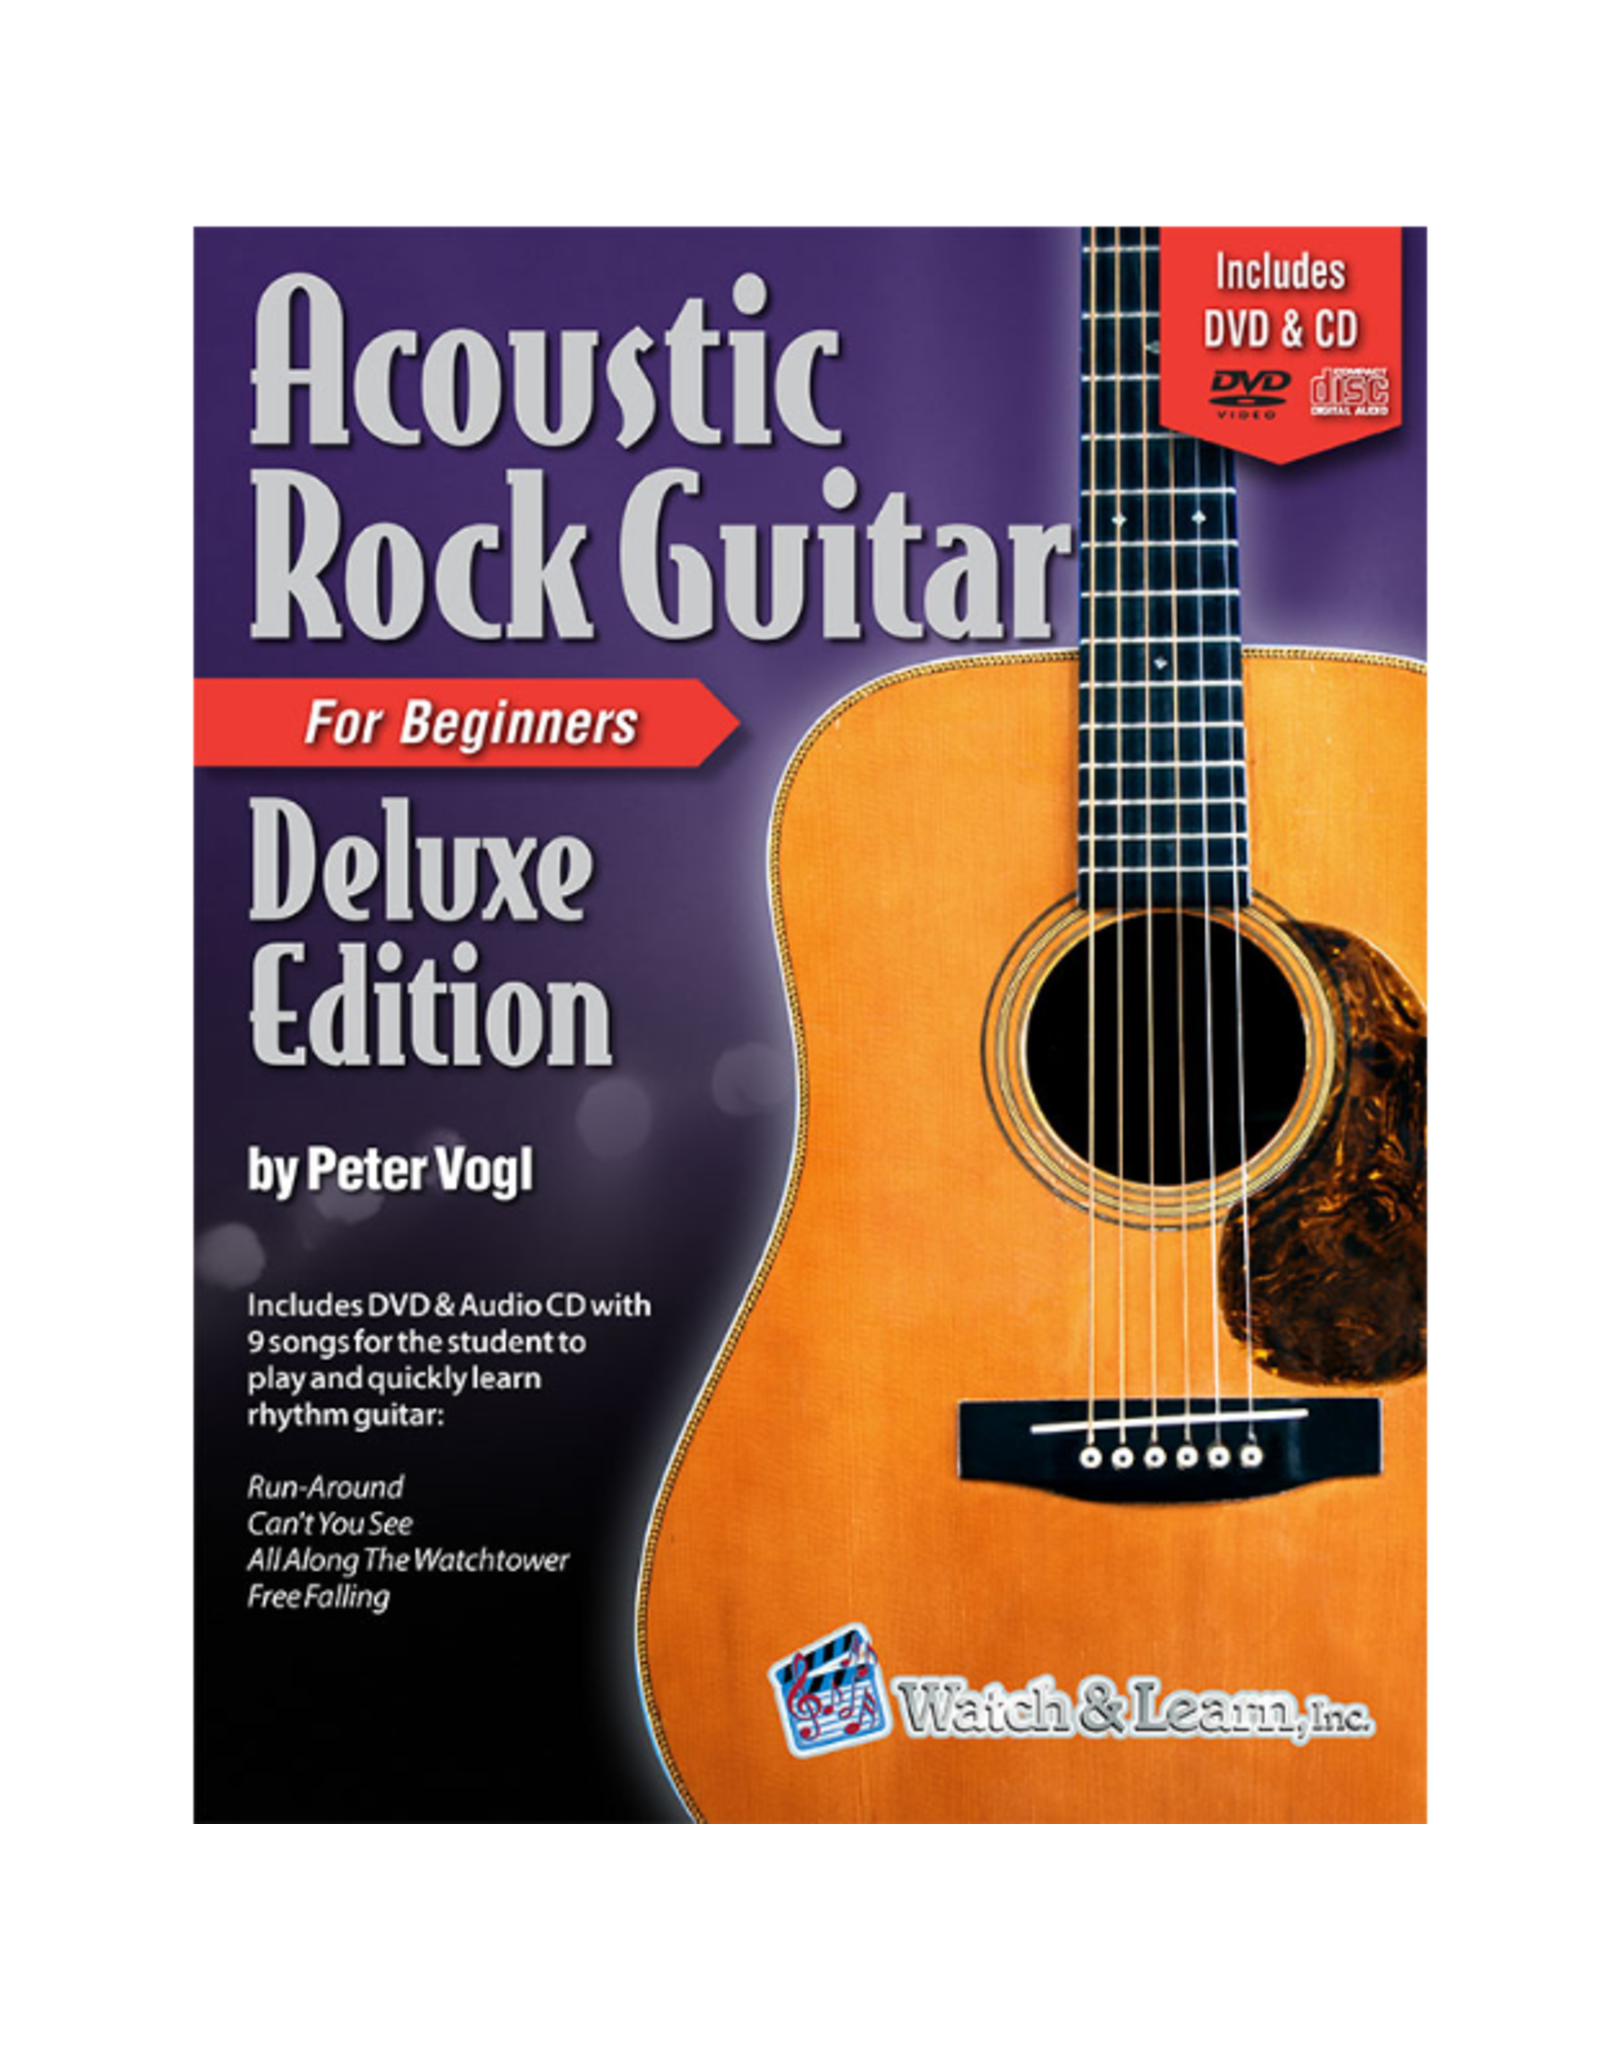 Watch & Learn Watch & Learn Acoustic Rock Guitar Deluxe Edition